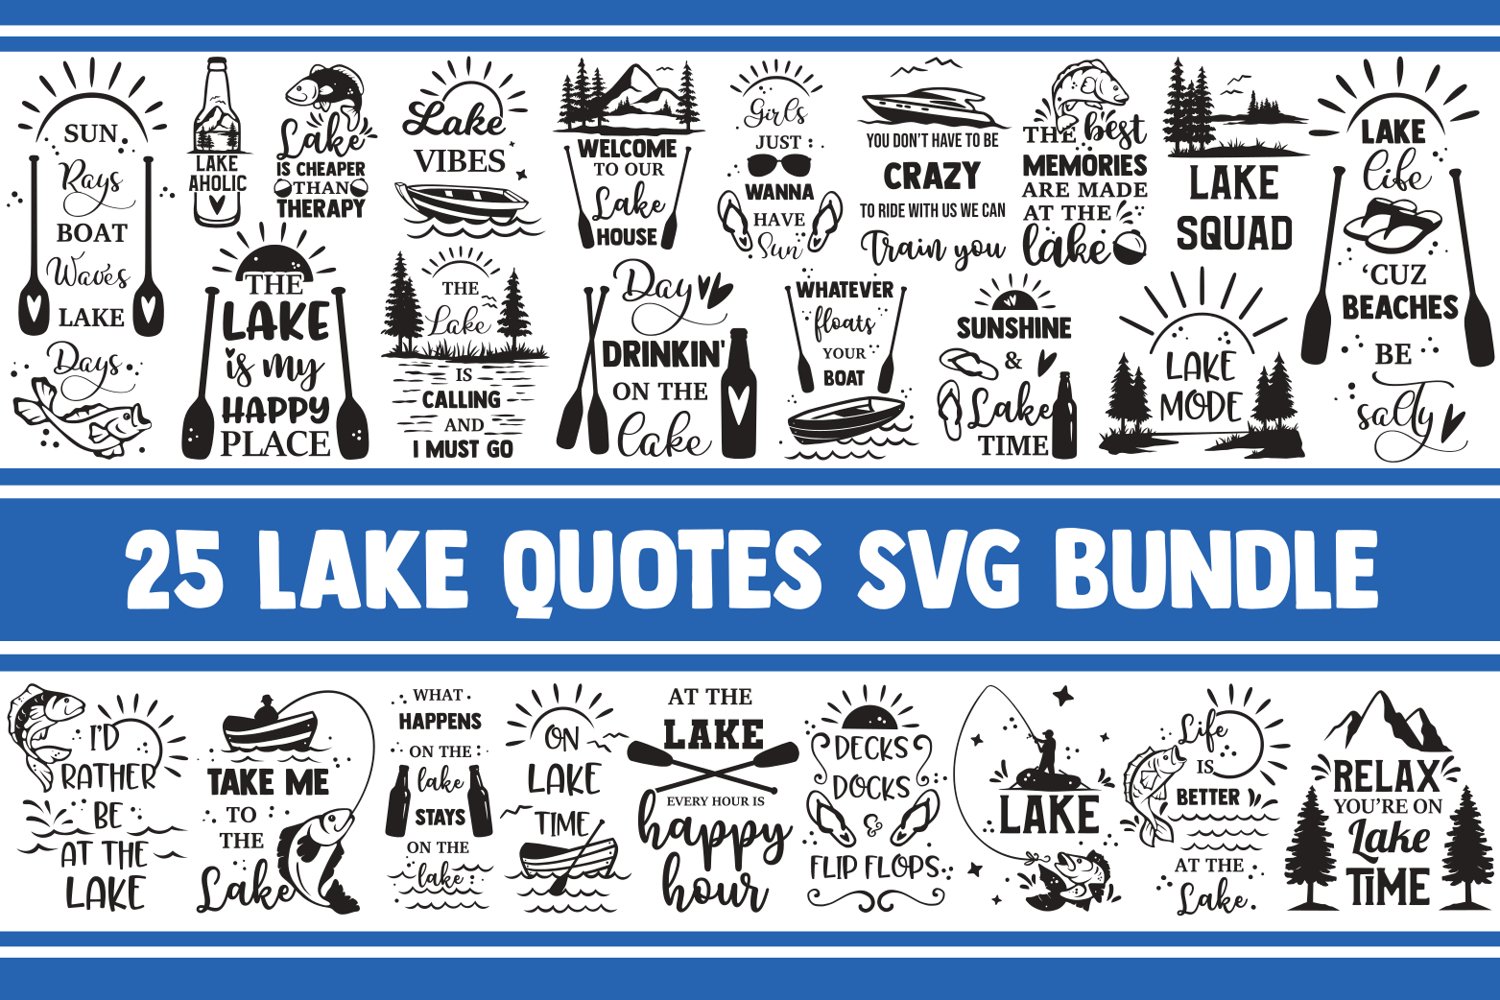 Cover image of Lake SVG Bundle.